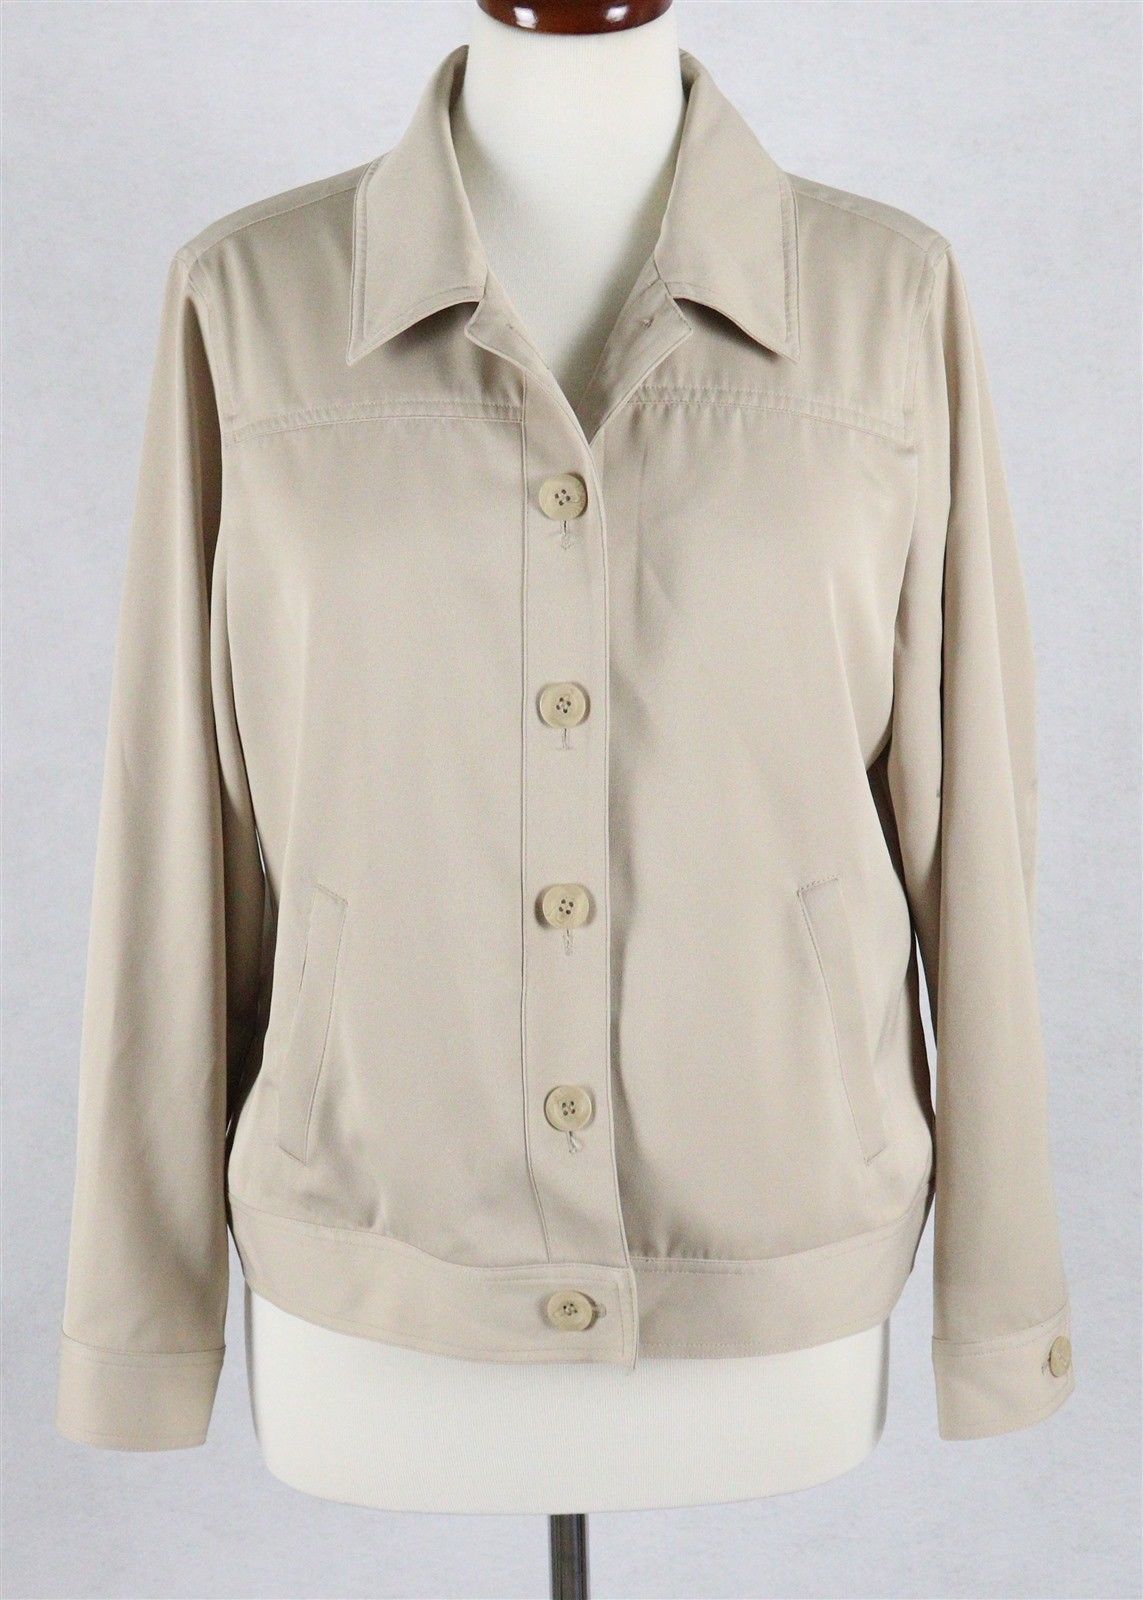 Appleseed's Womens Long Sleeve Beige Jacket Shirt Size 10P 10 Petite ...